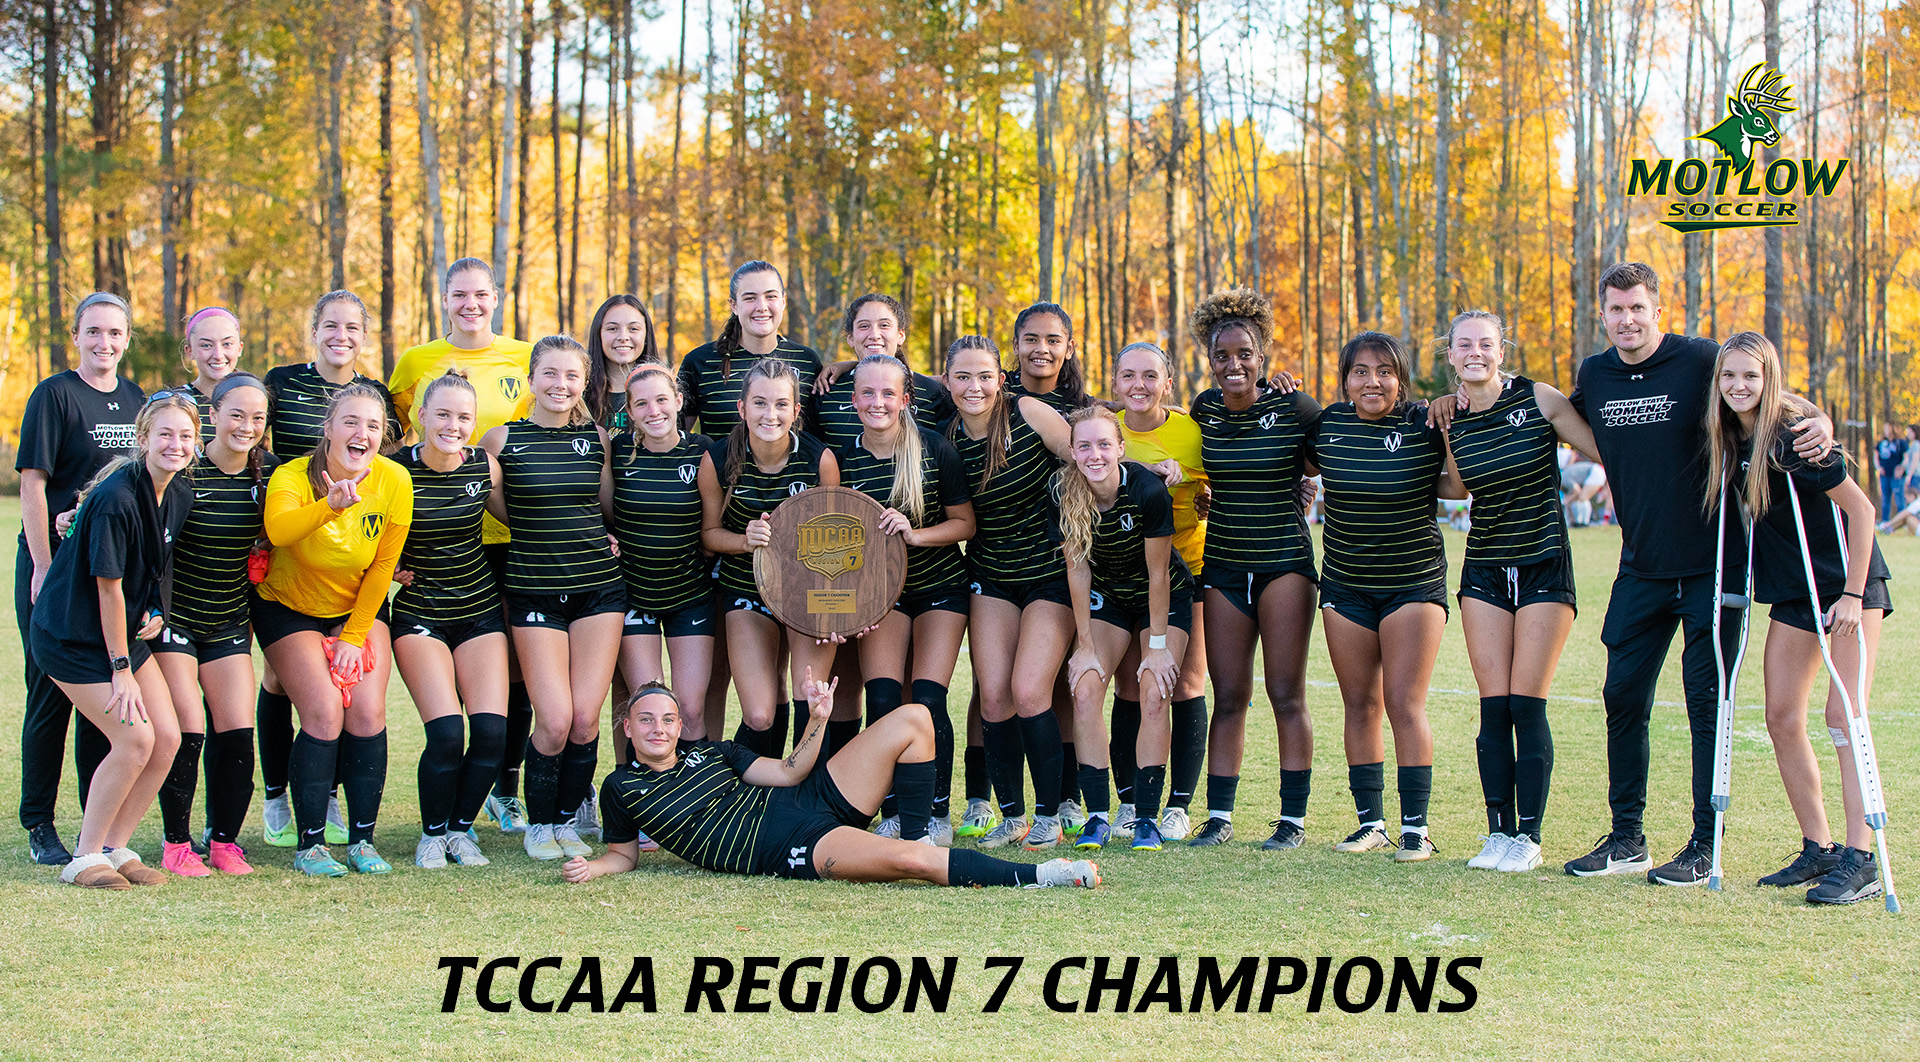 TCCAA Region 7 Champions